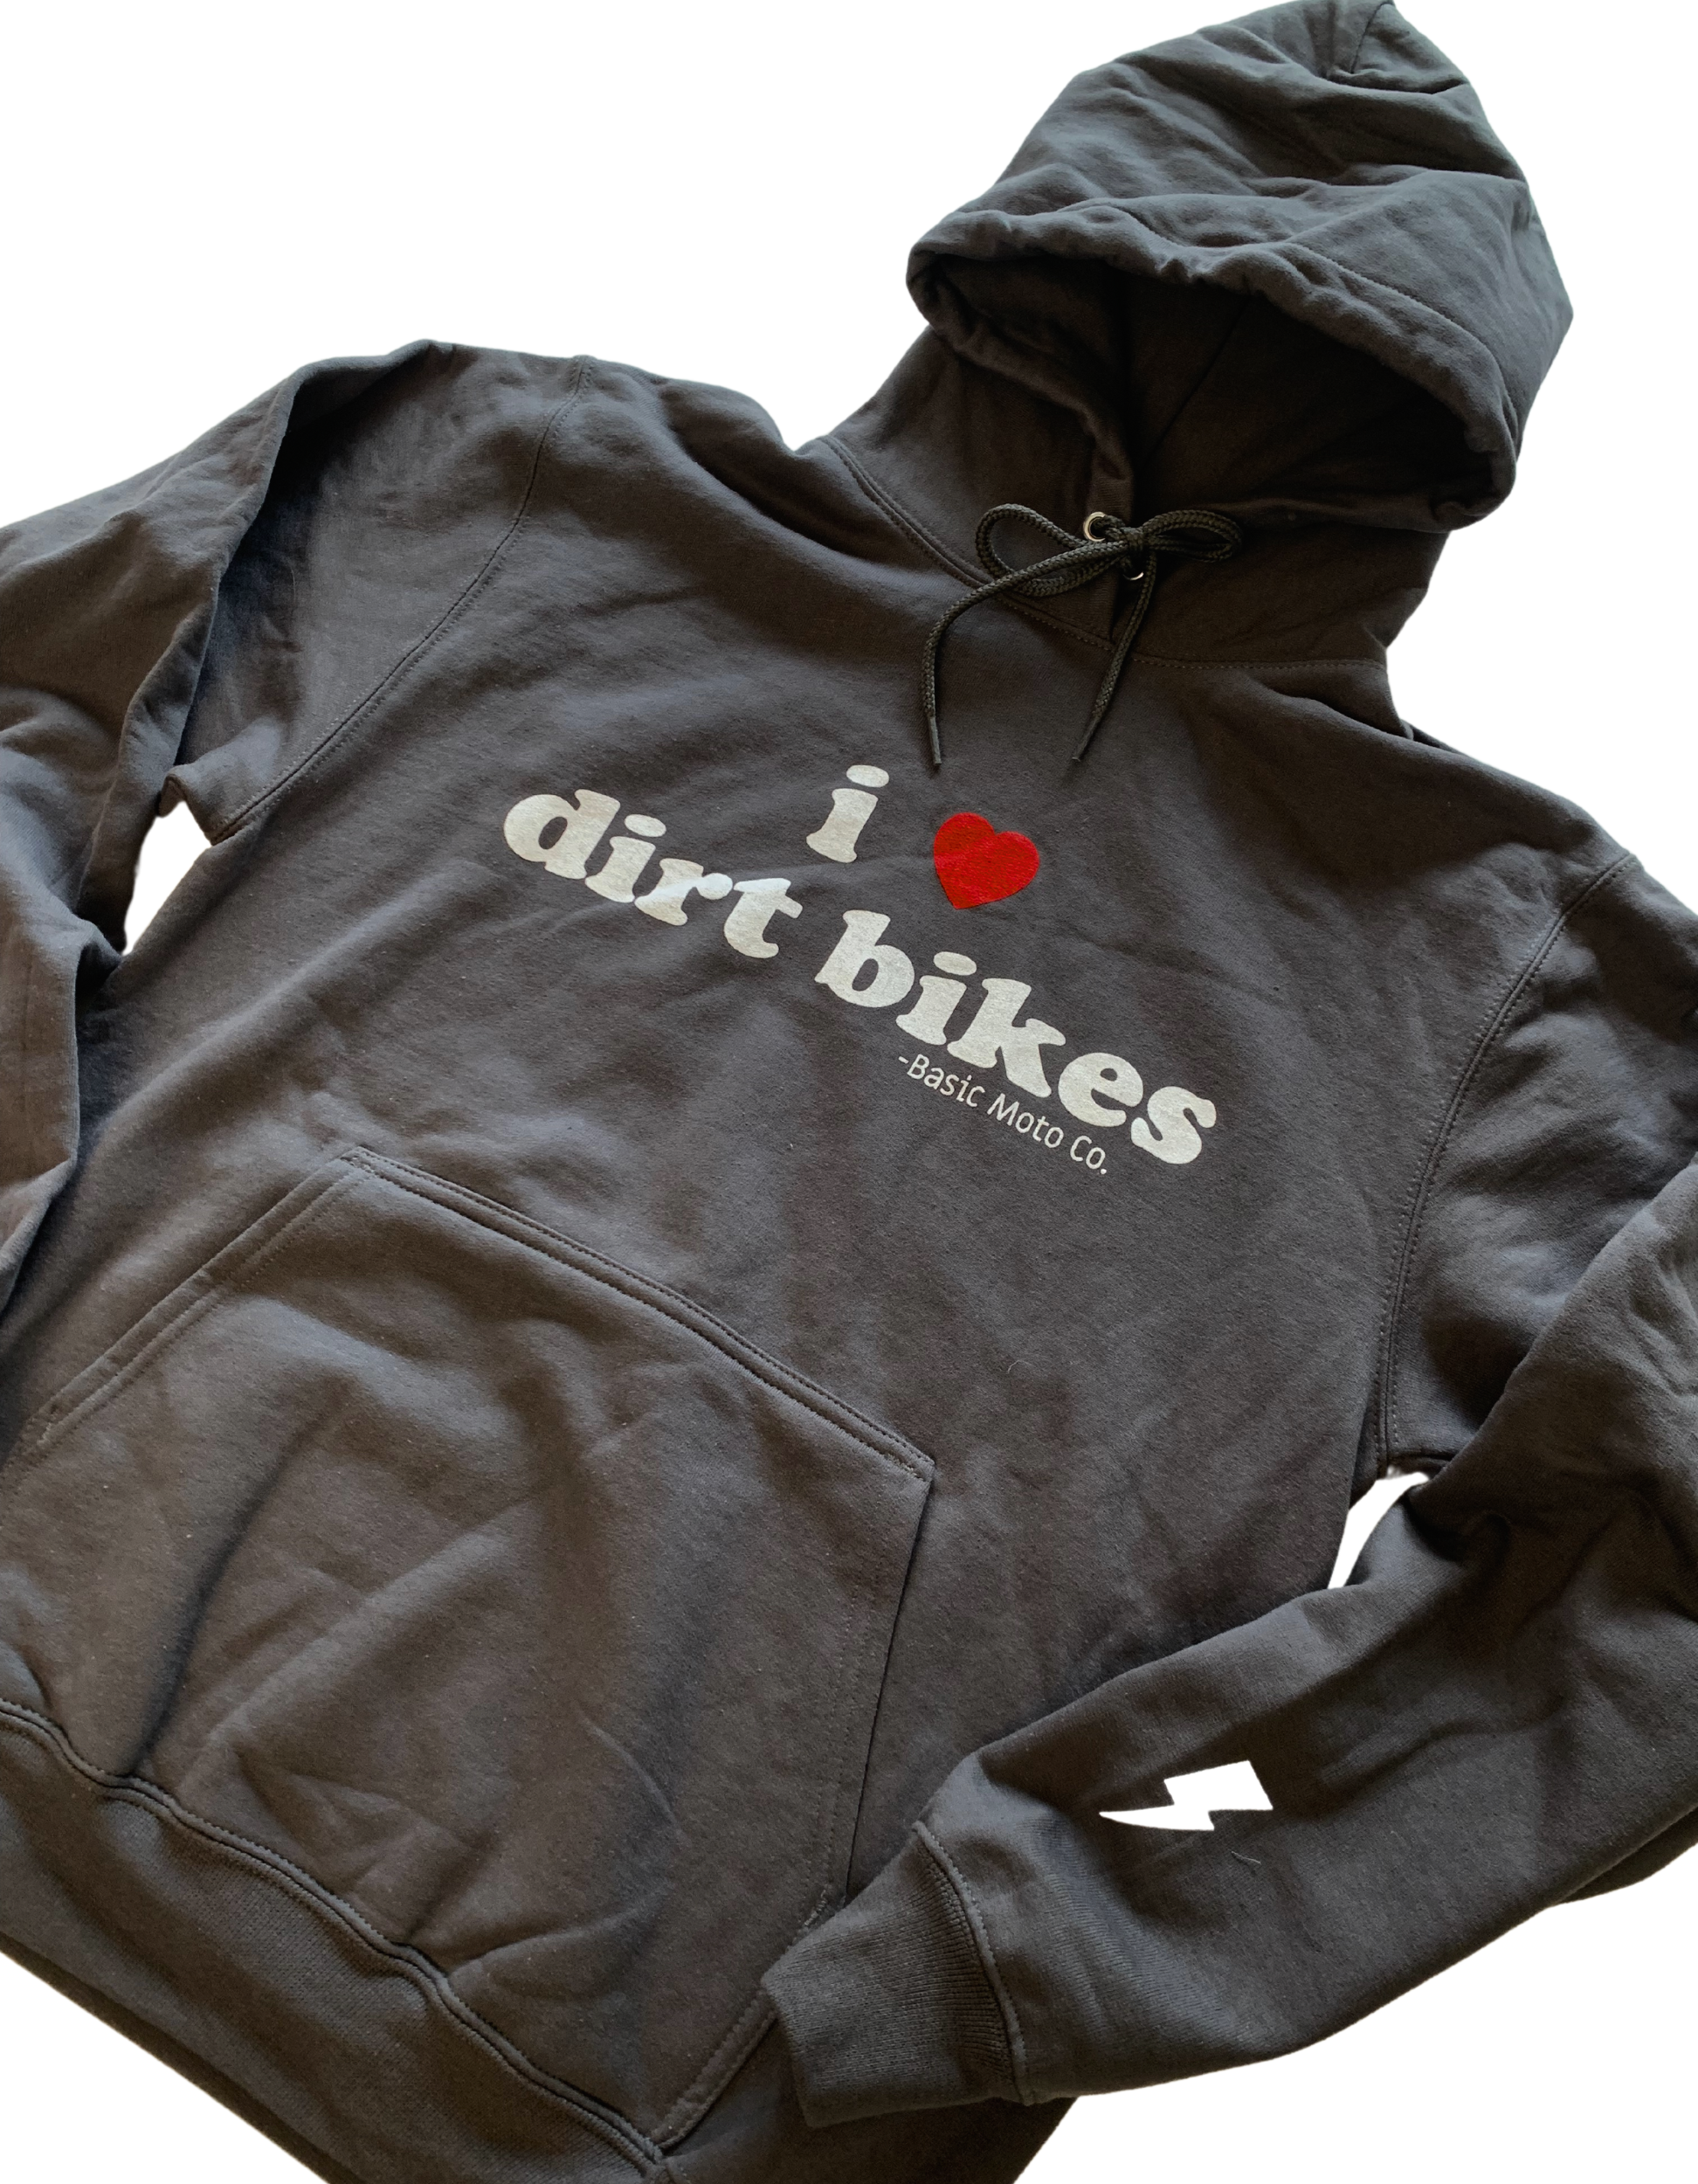 I Heart Dirt Bikes - Hooded Sweatshirt - Charcoal